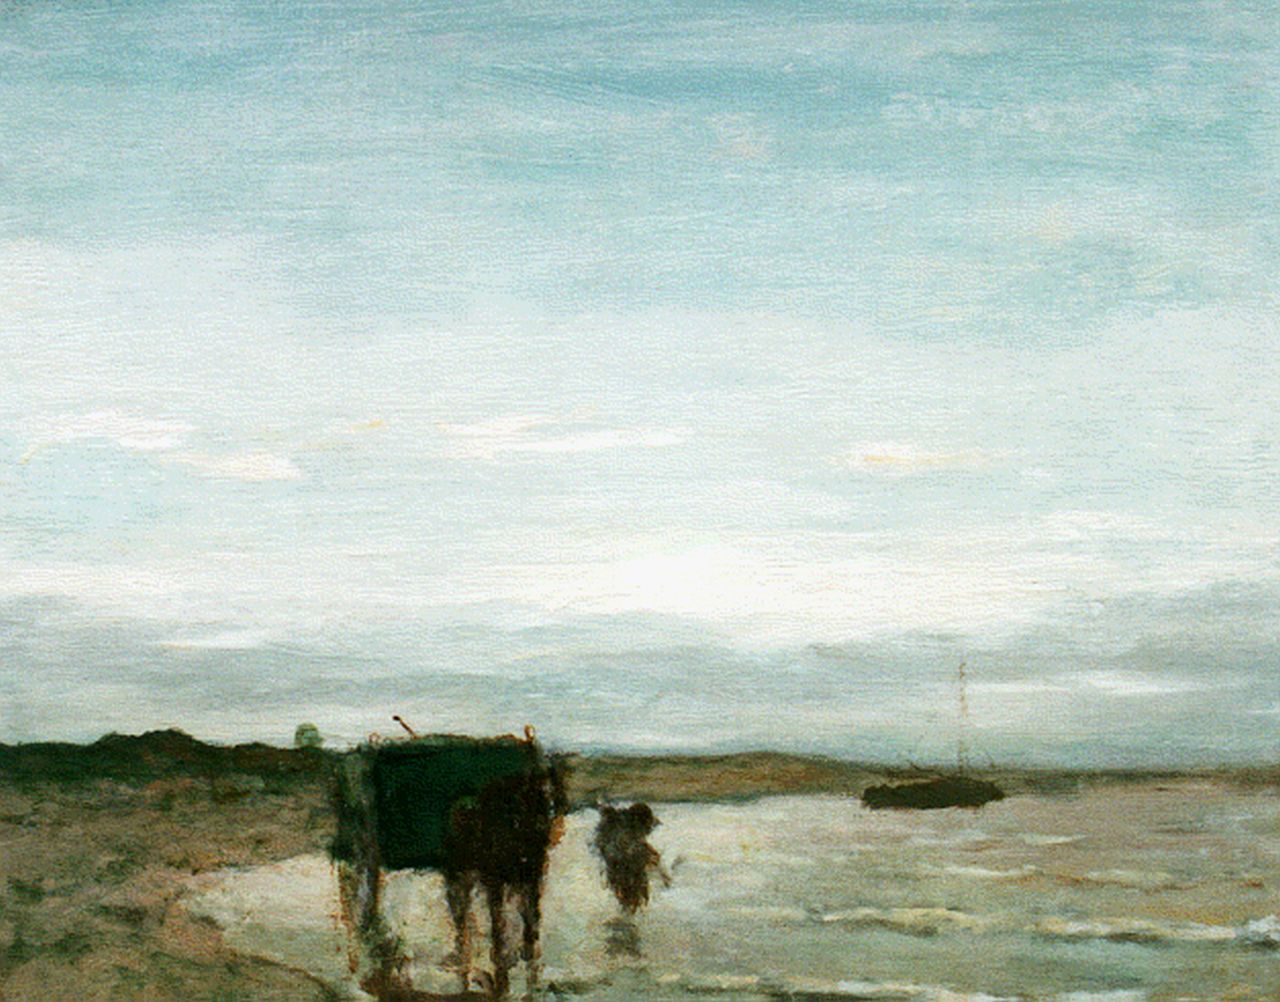 Weissenbruch H.J.  | Hendrik Johannes 'J.H.' Weissenbruch, Schelpenvisser aan de kustlijn, olieverf op doek 37,5 x 46,0 cm, gesigneerd linksonder